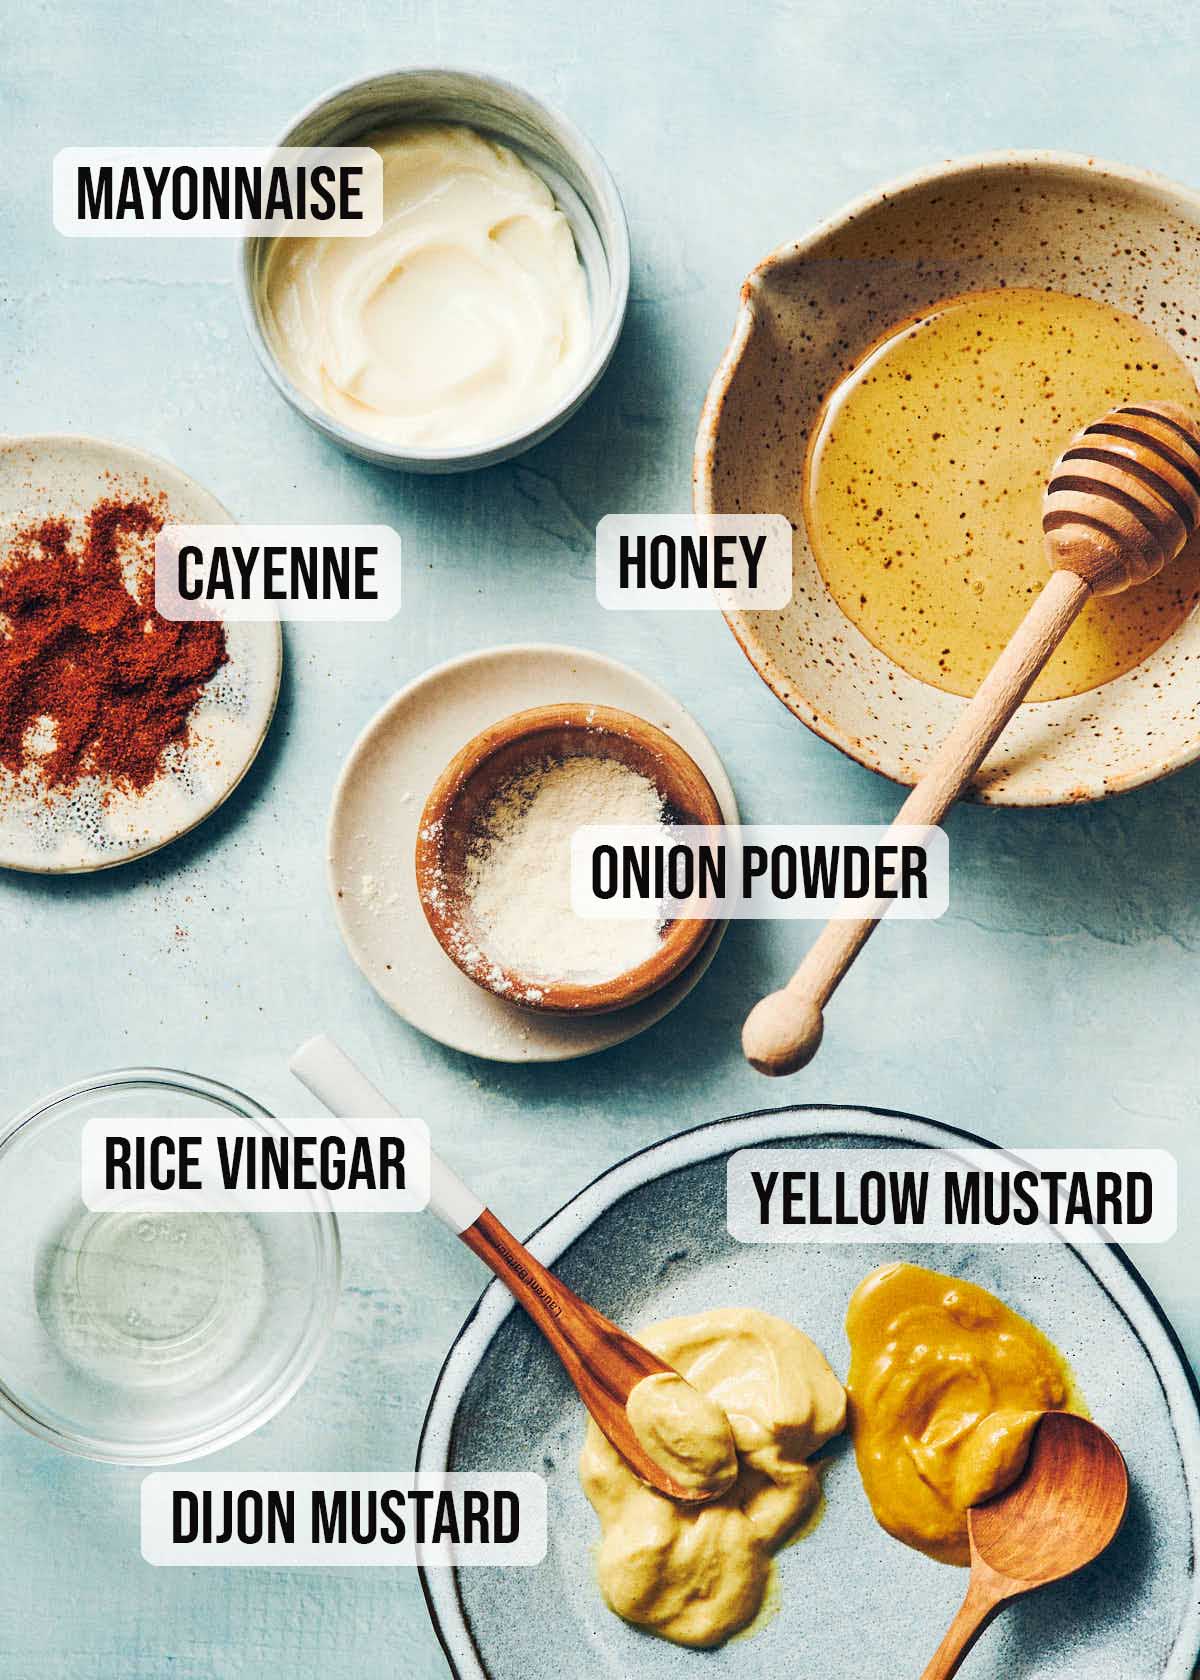 Ingredients to make homemade honey mustard sauce: mayonnaise, honey, onion powder, yellow mustard, dijon mustard, rice vinegar, and cayenne